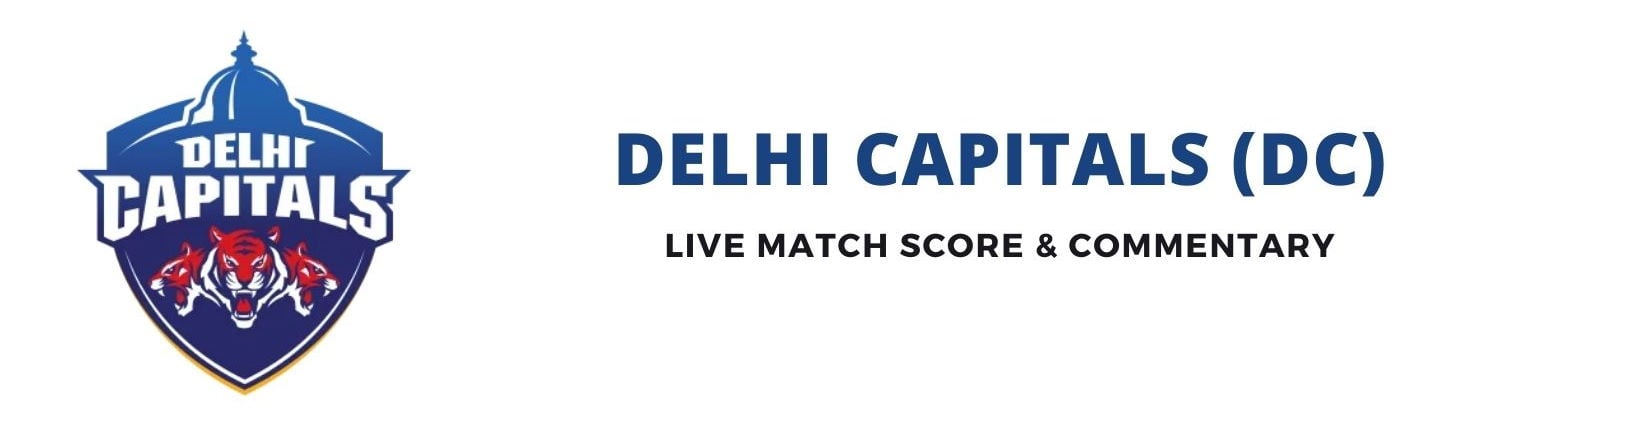 DC vs CSK live score with full match scorecard today